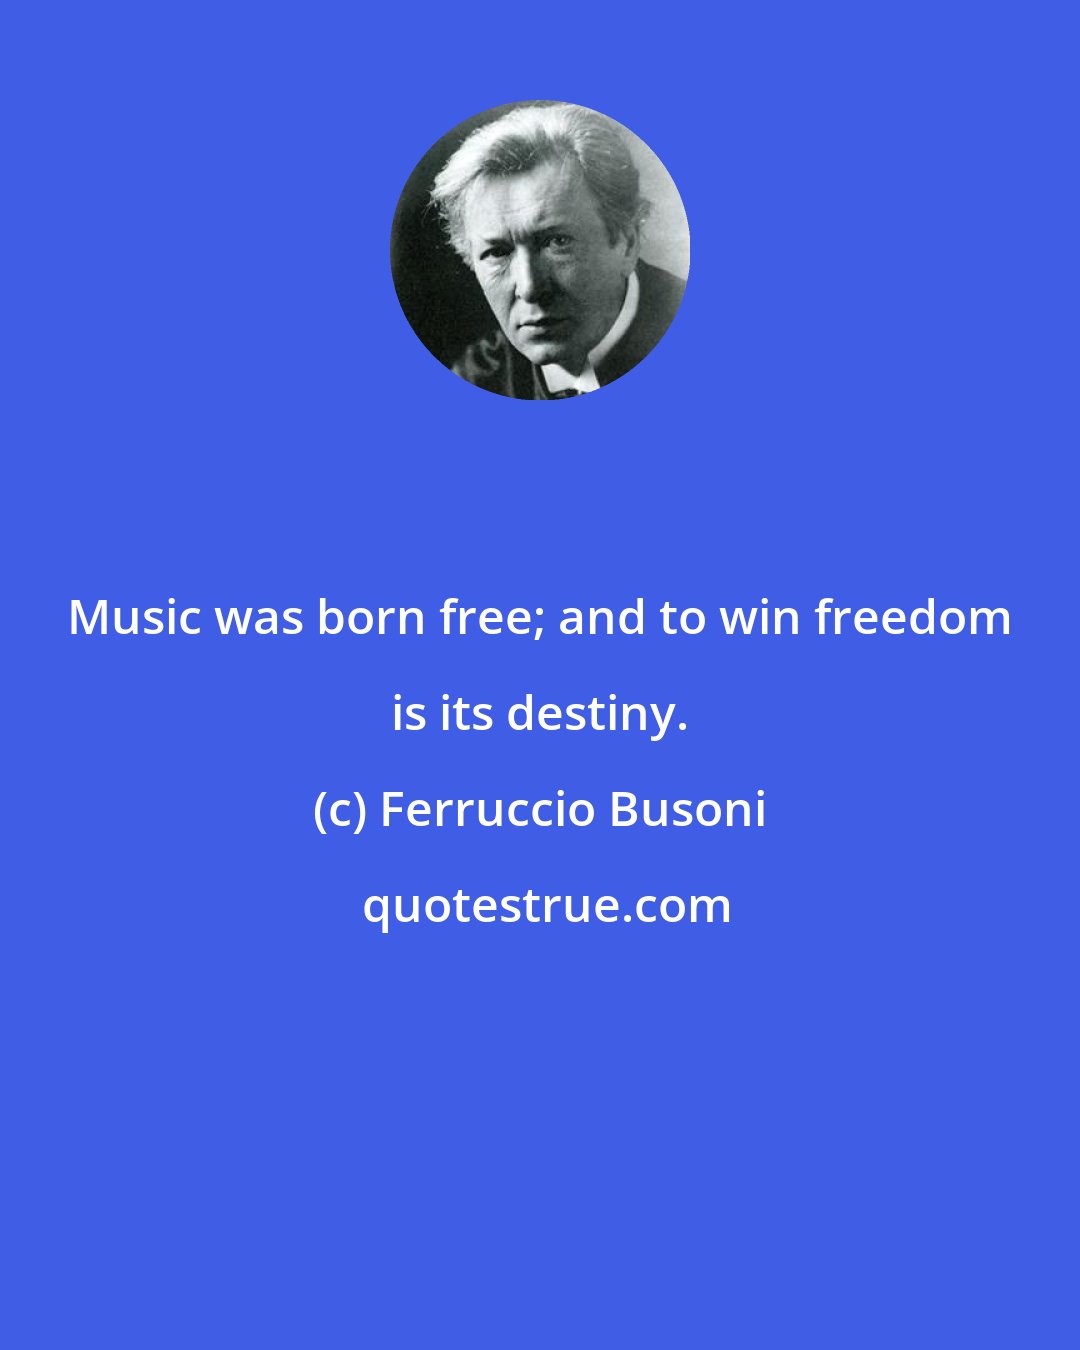 Ferruccio Busoni: Music was born free; and to win freedom is its destiny.